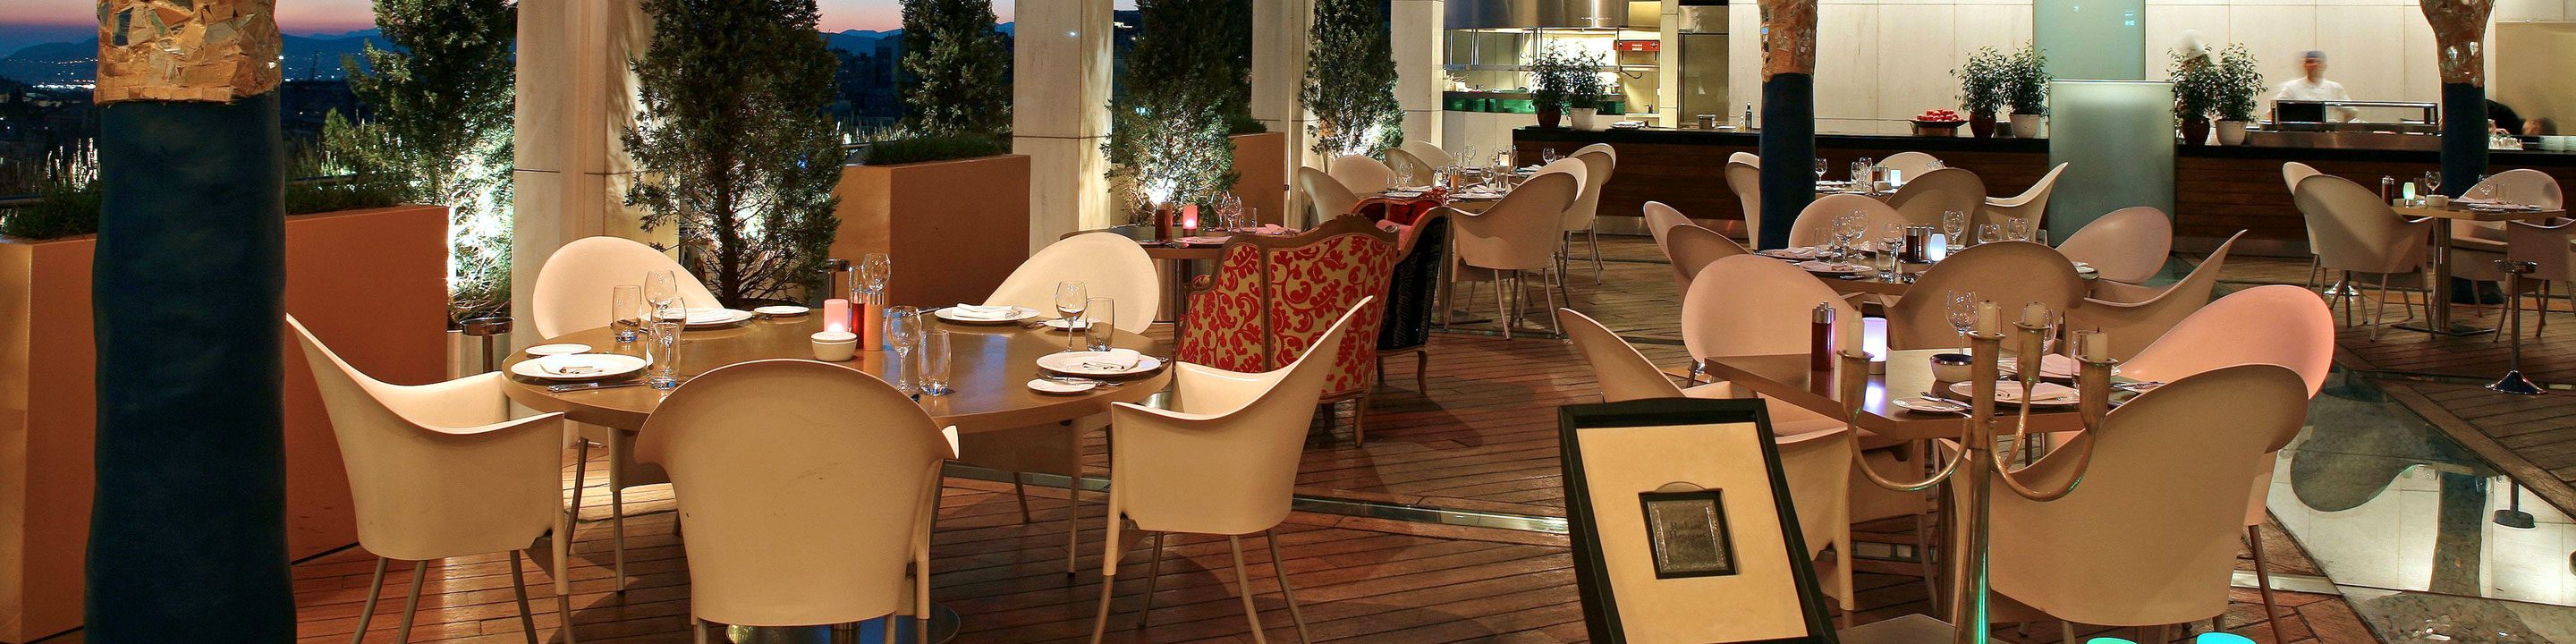 Hotel Restaurants in Athens